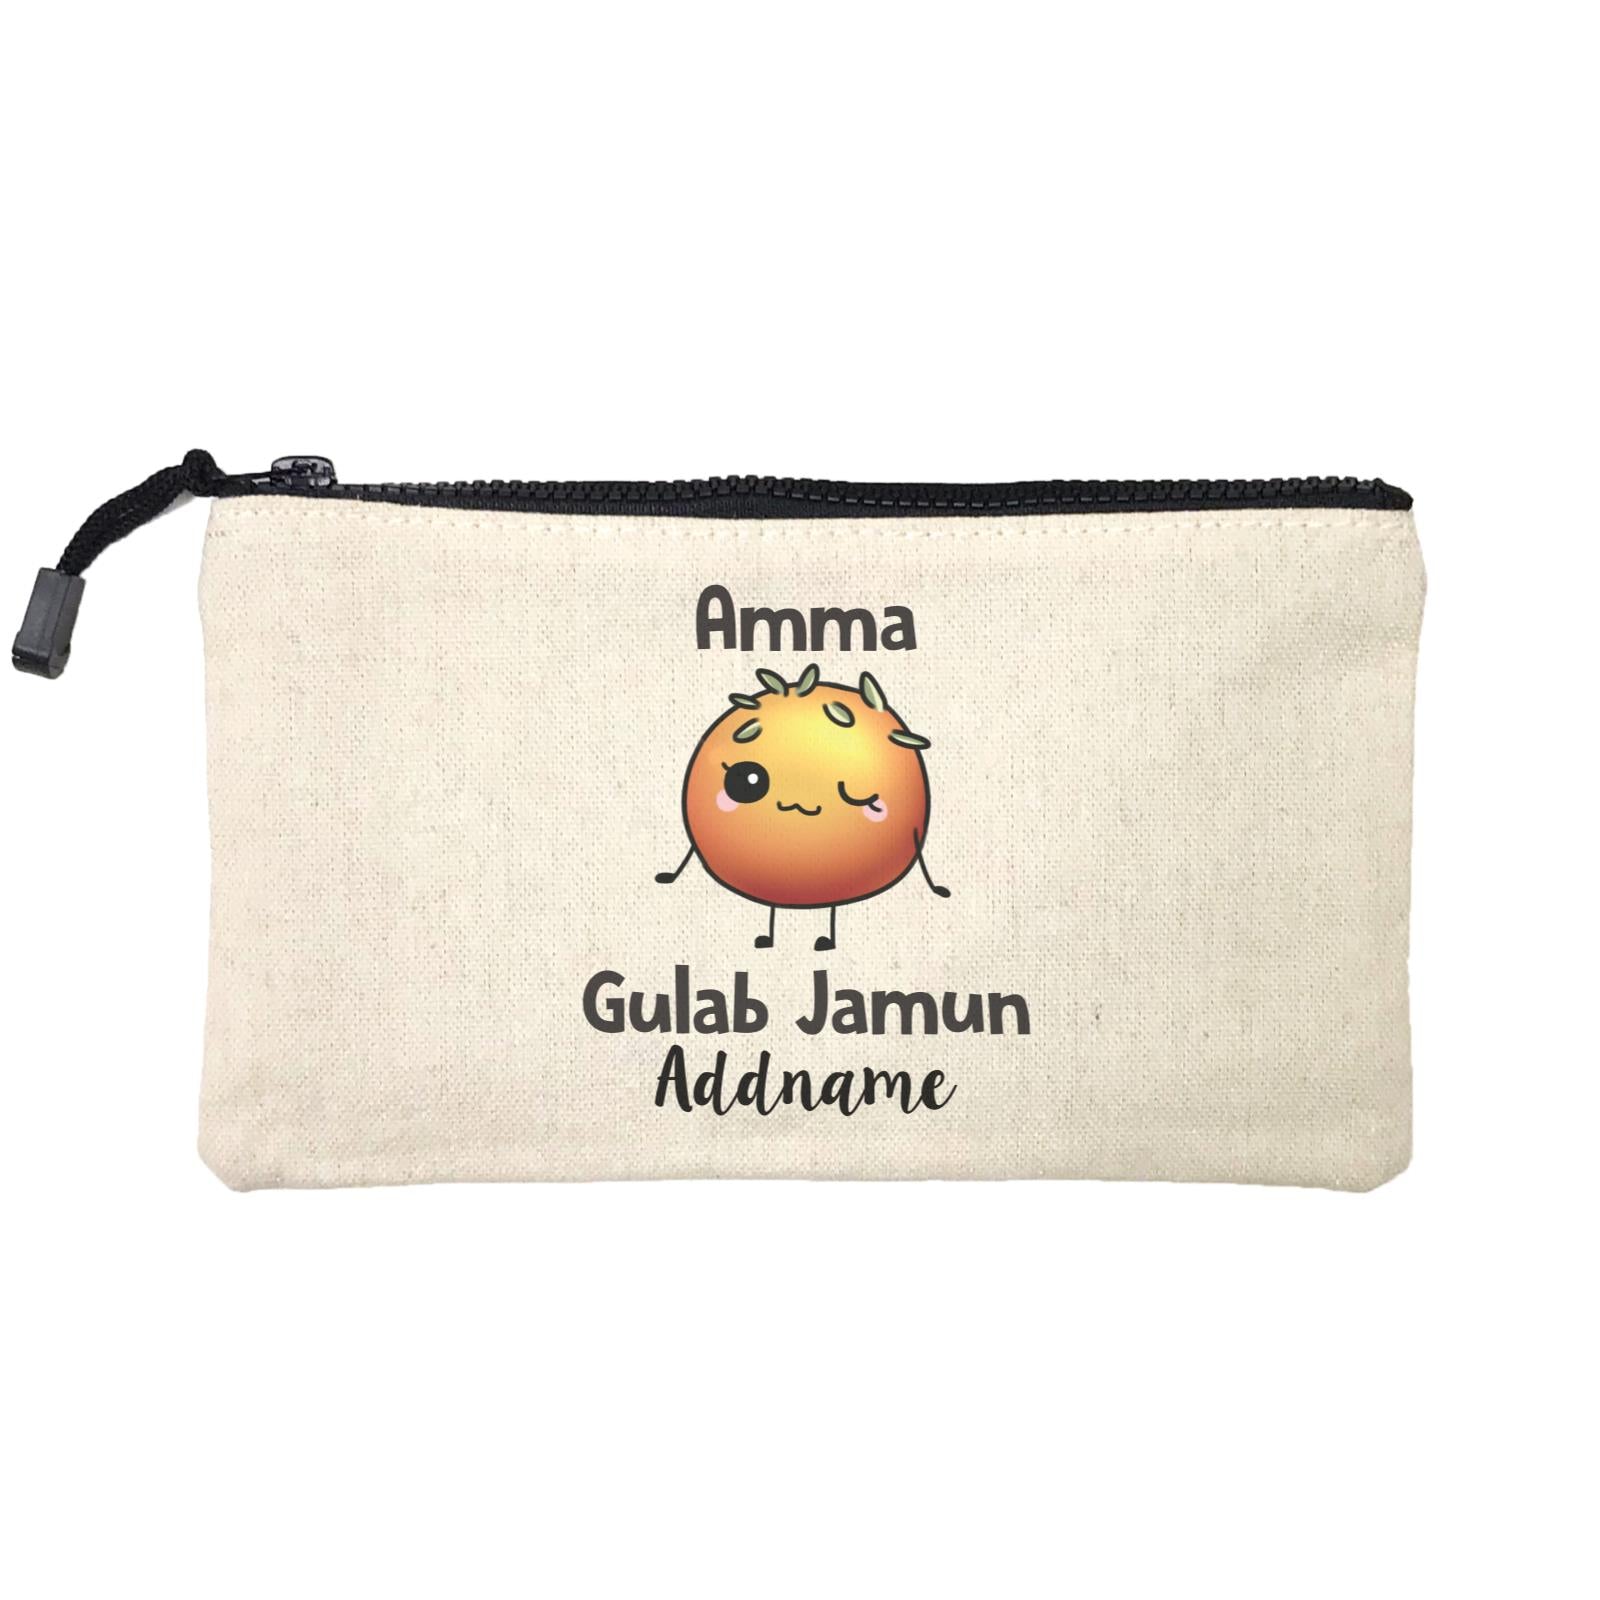 Deepavali Cute Amma Gulab Jamun Addname Mini Accessories Stationery Pouch